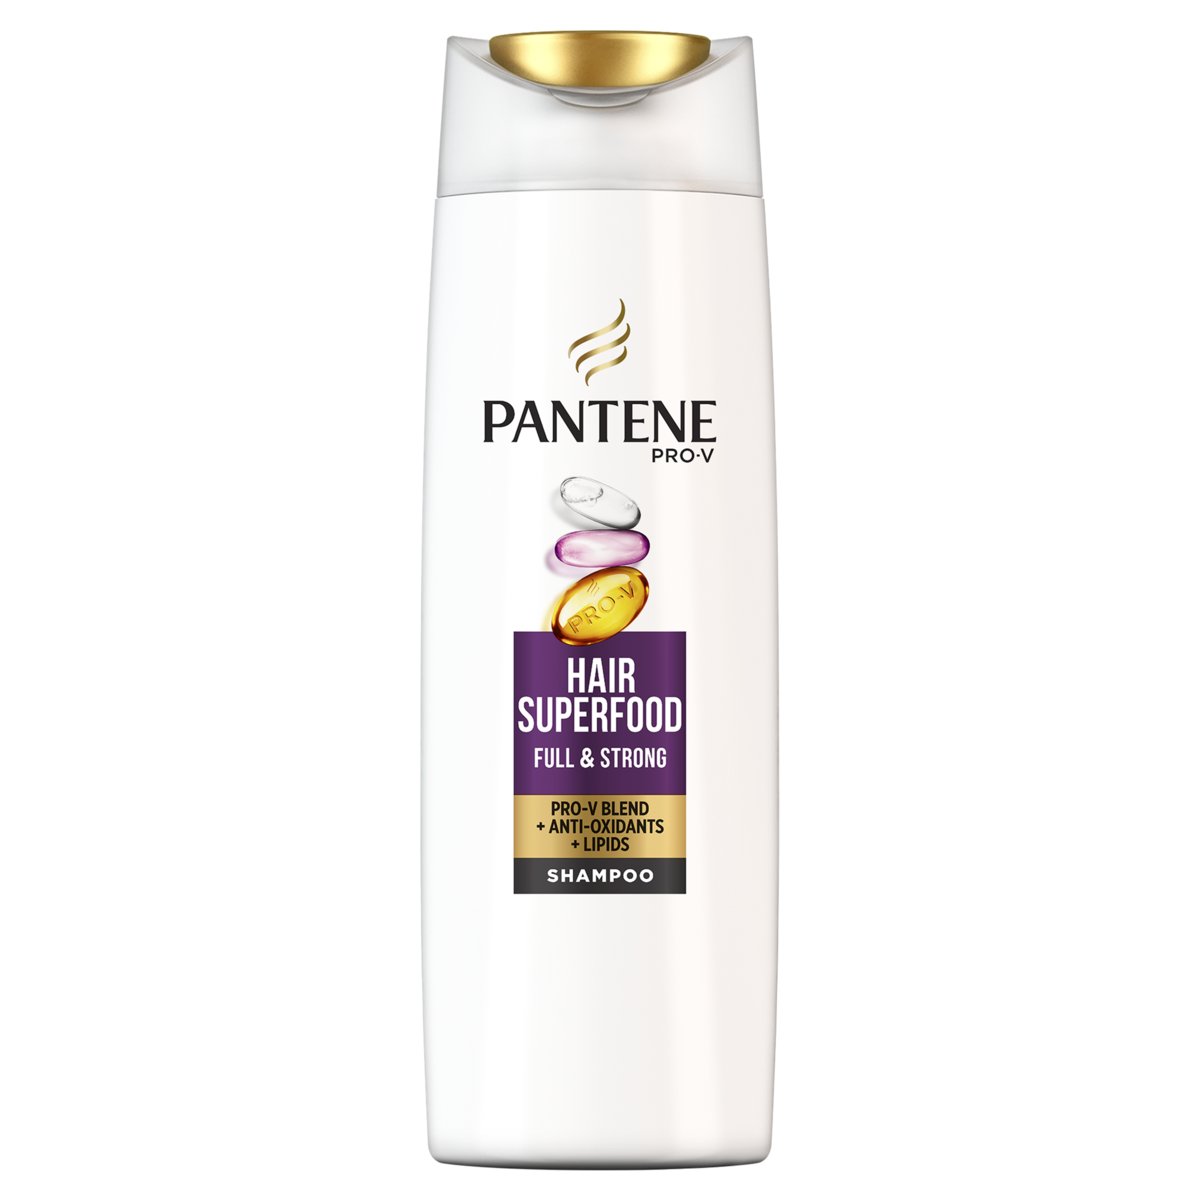 pantene oil therapy szampon 400 ml